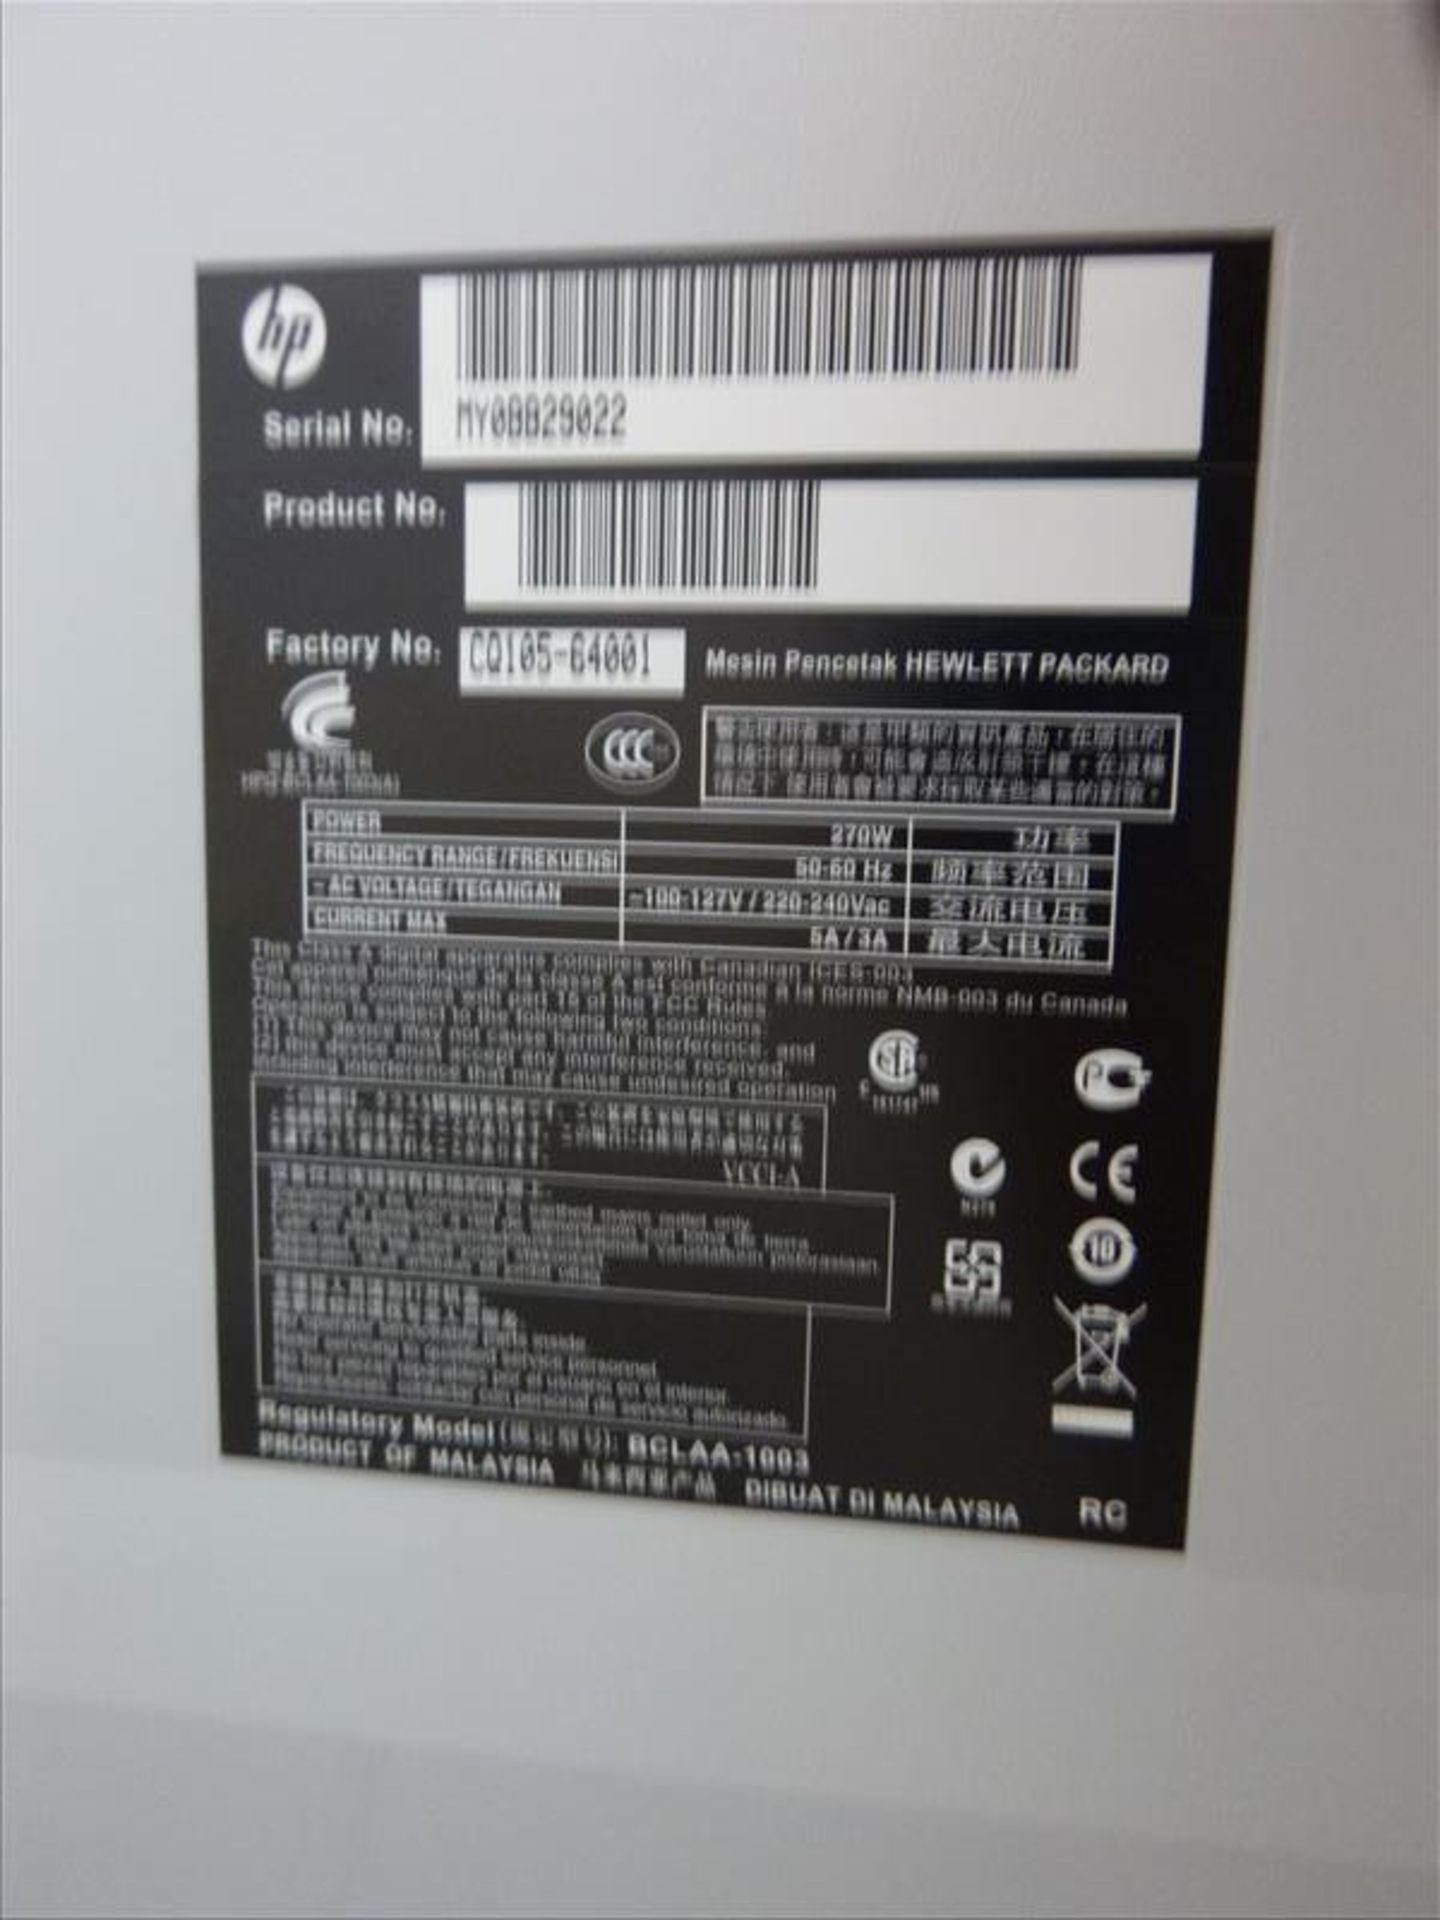 HP DesignJet T7100 Plotter [4] - Image 2 of 2